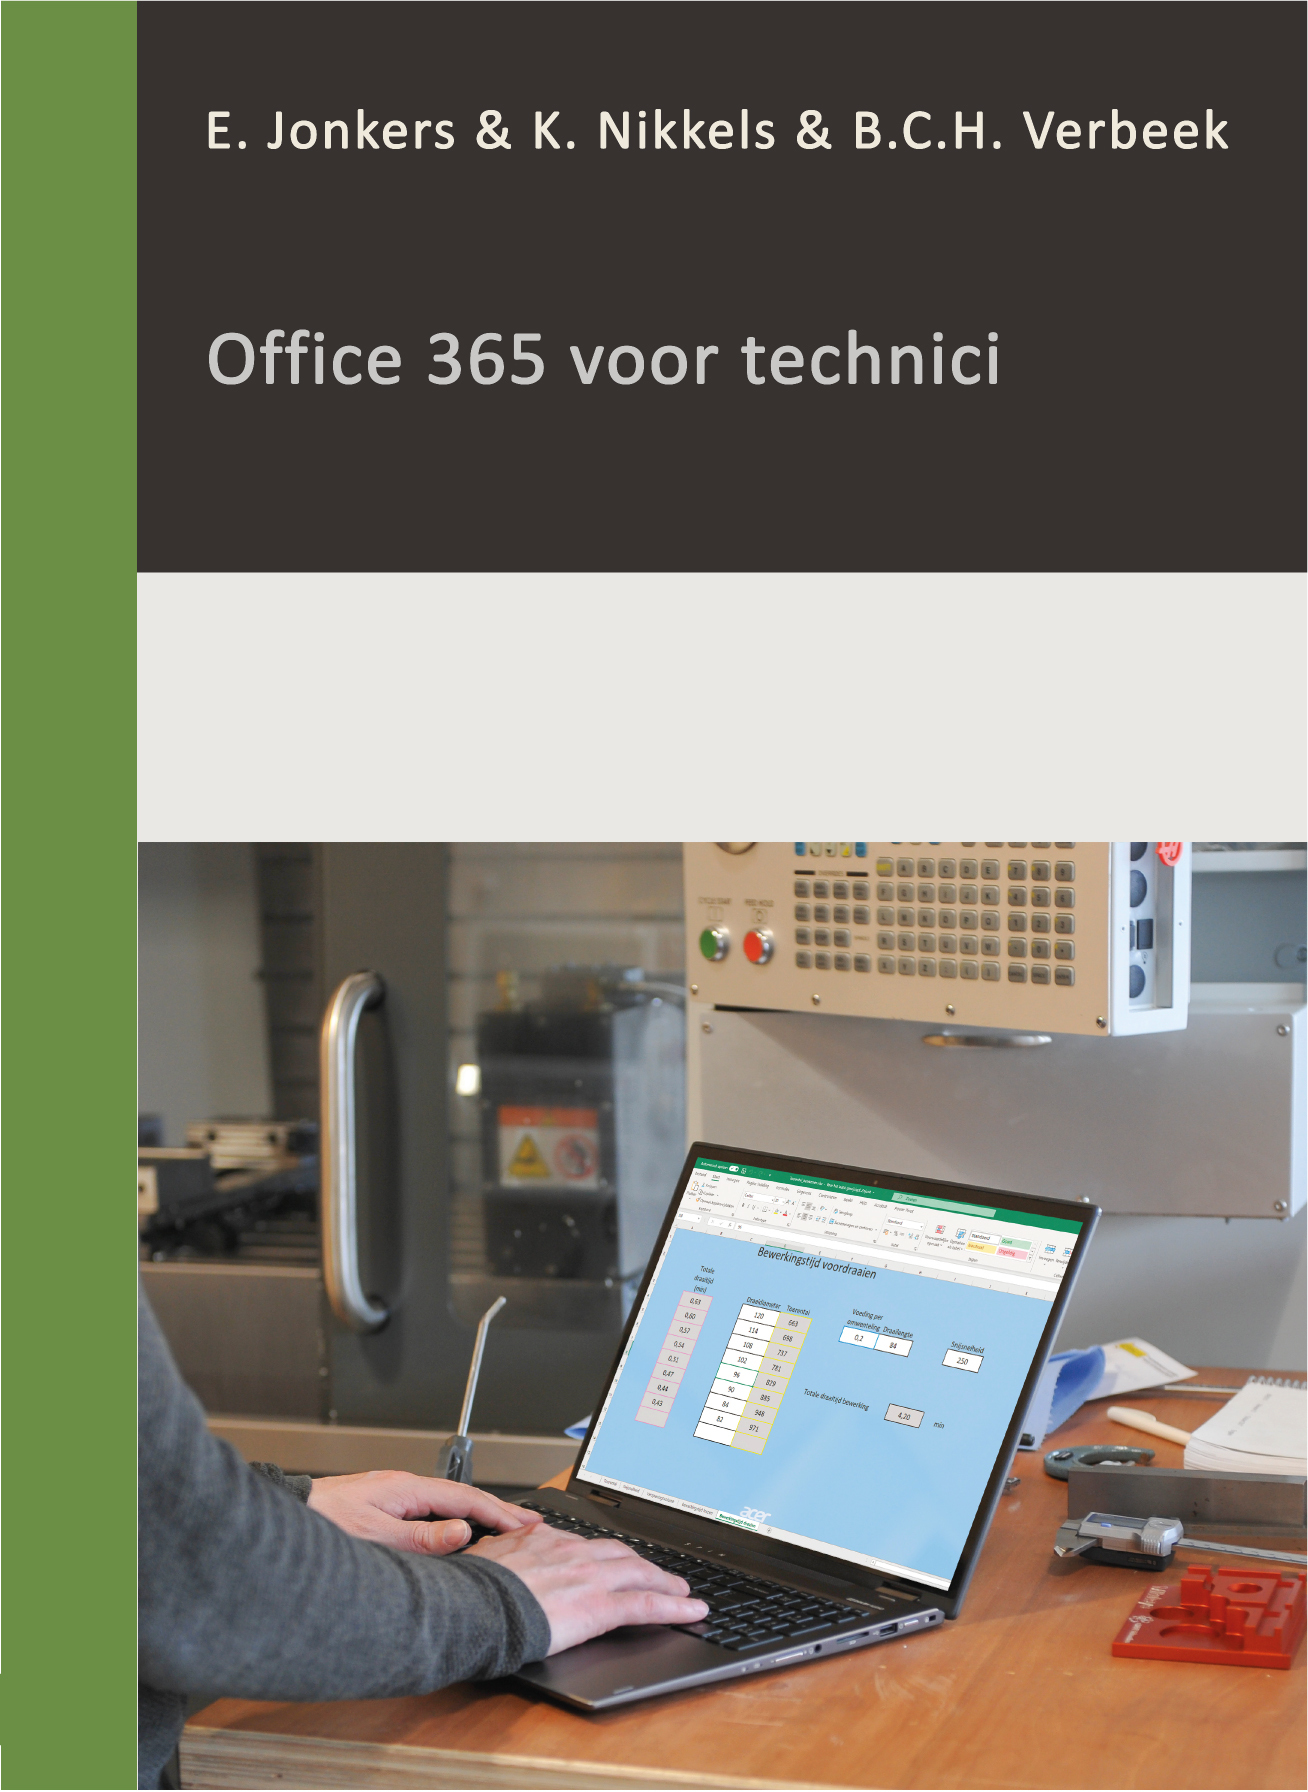 Office 365 voor technici's thumbnail image